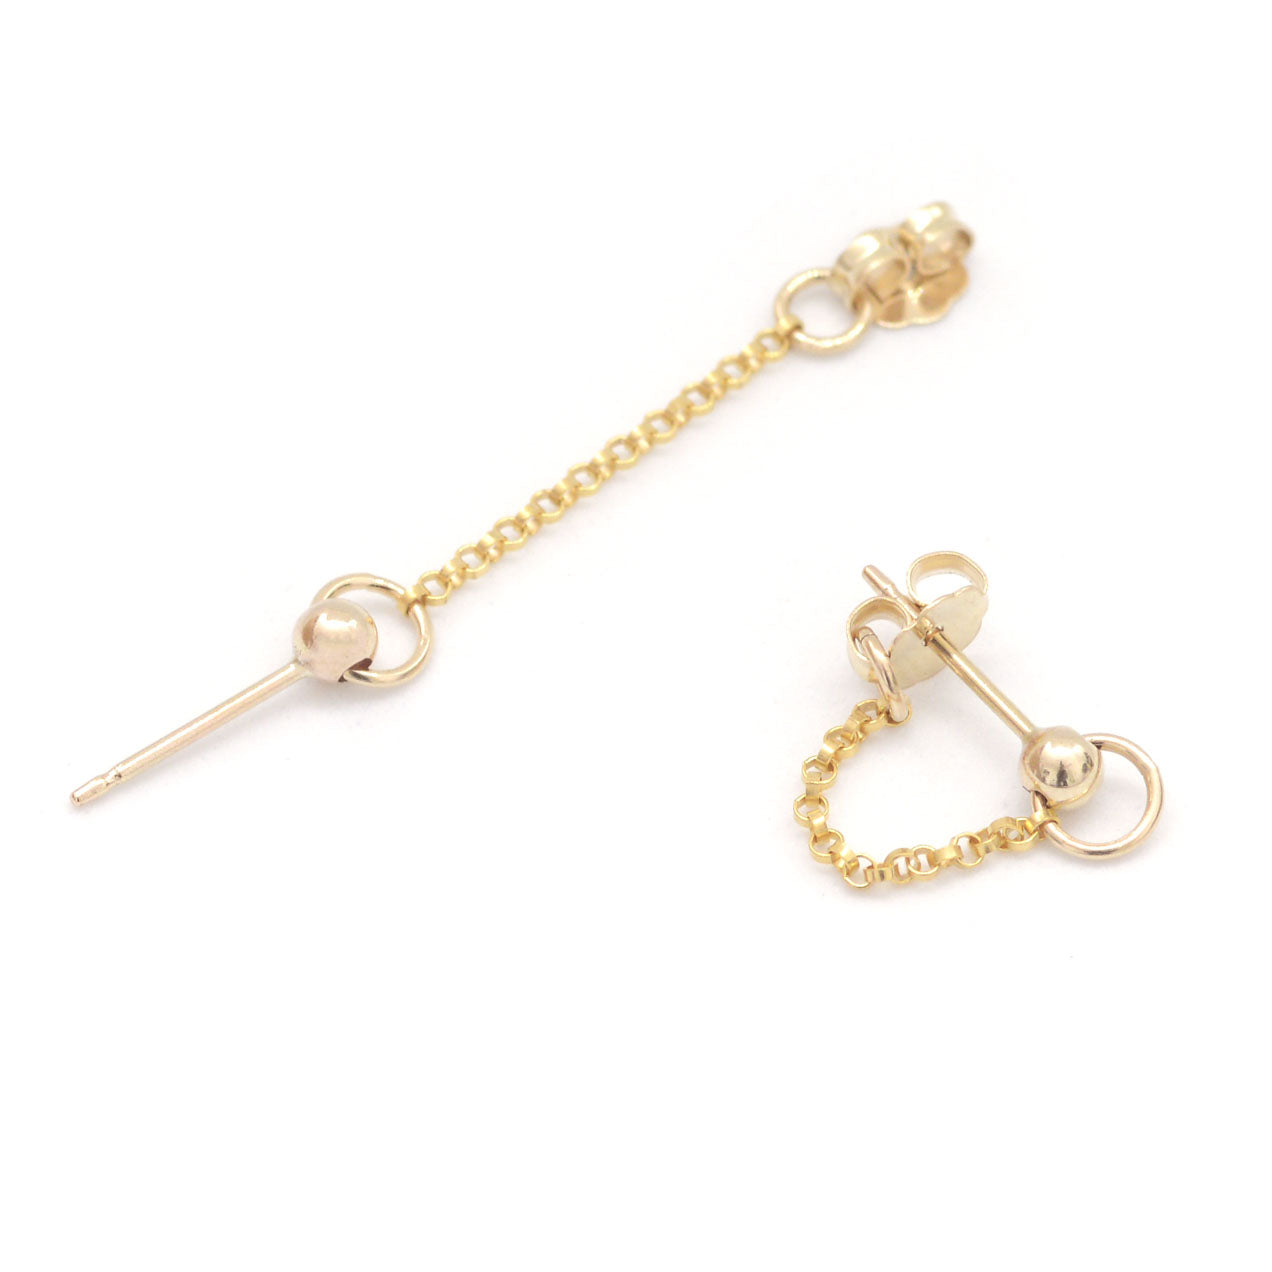 Tiny Chain Lasso Post Earrings - Favor Jewelry